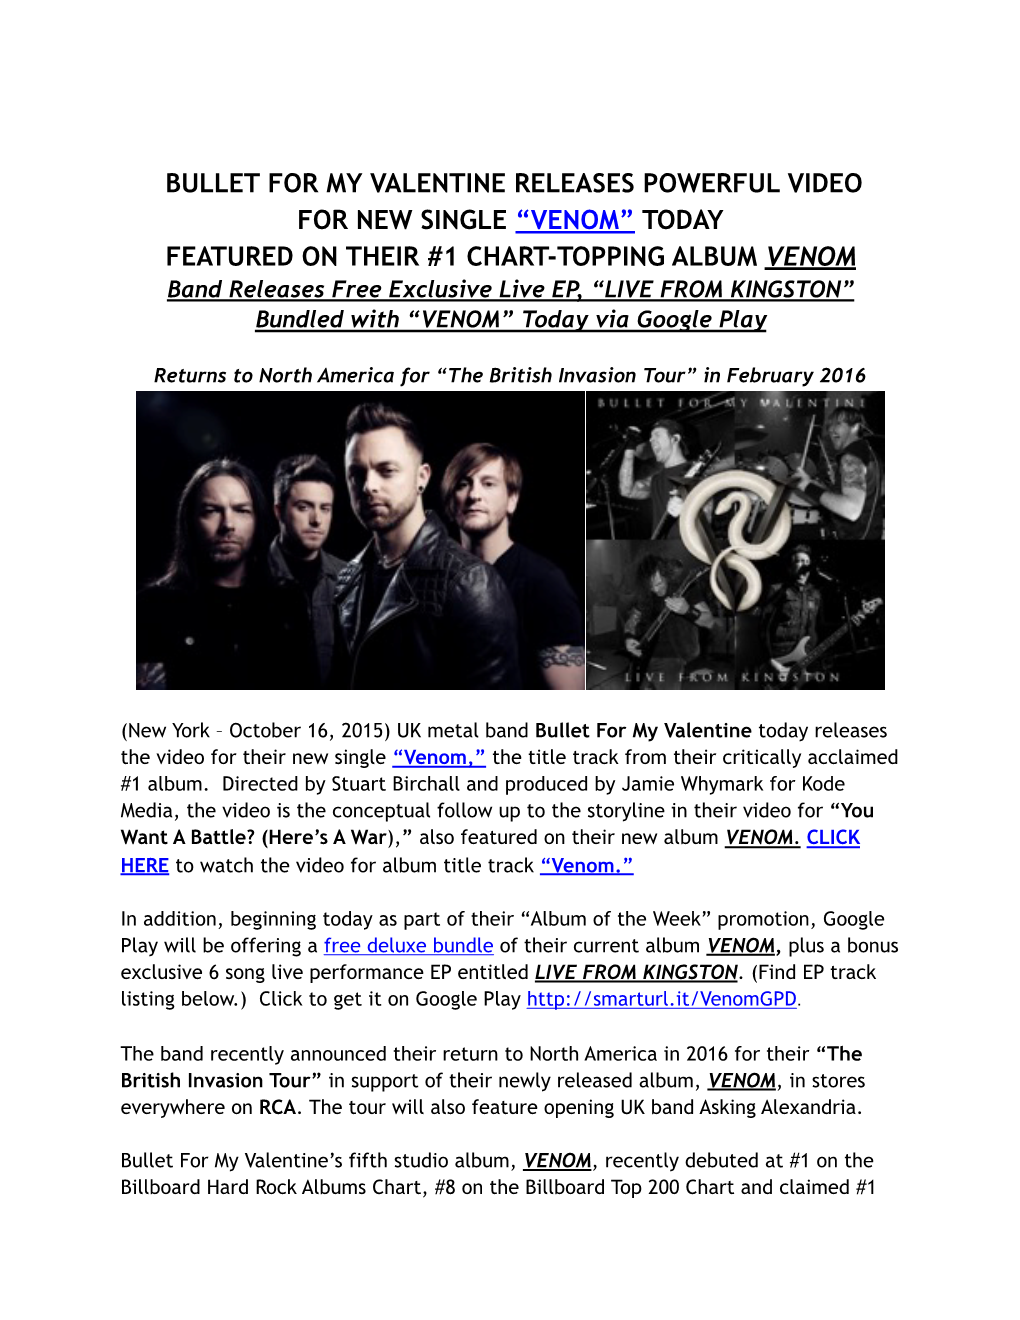 BFMV-Venom Video Press Release and Google Play Live EP